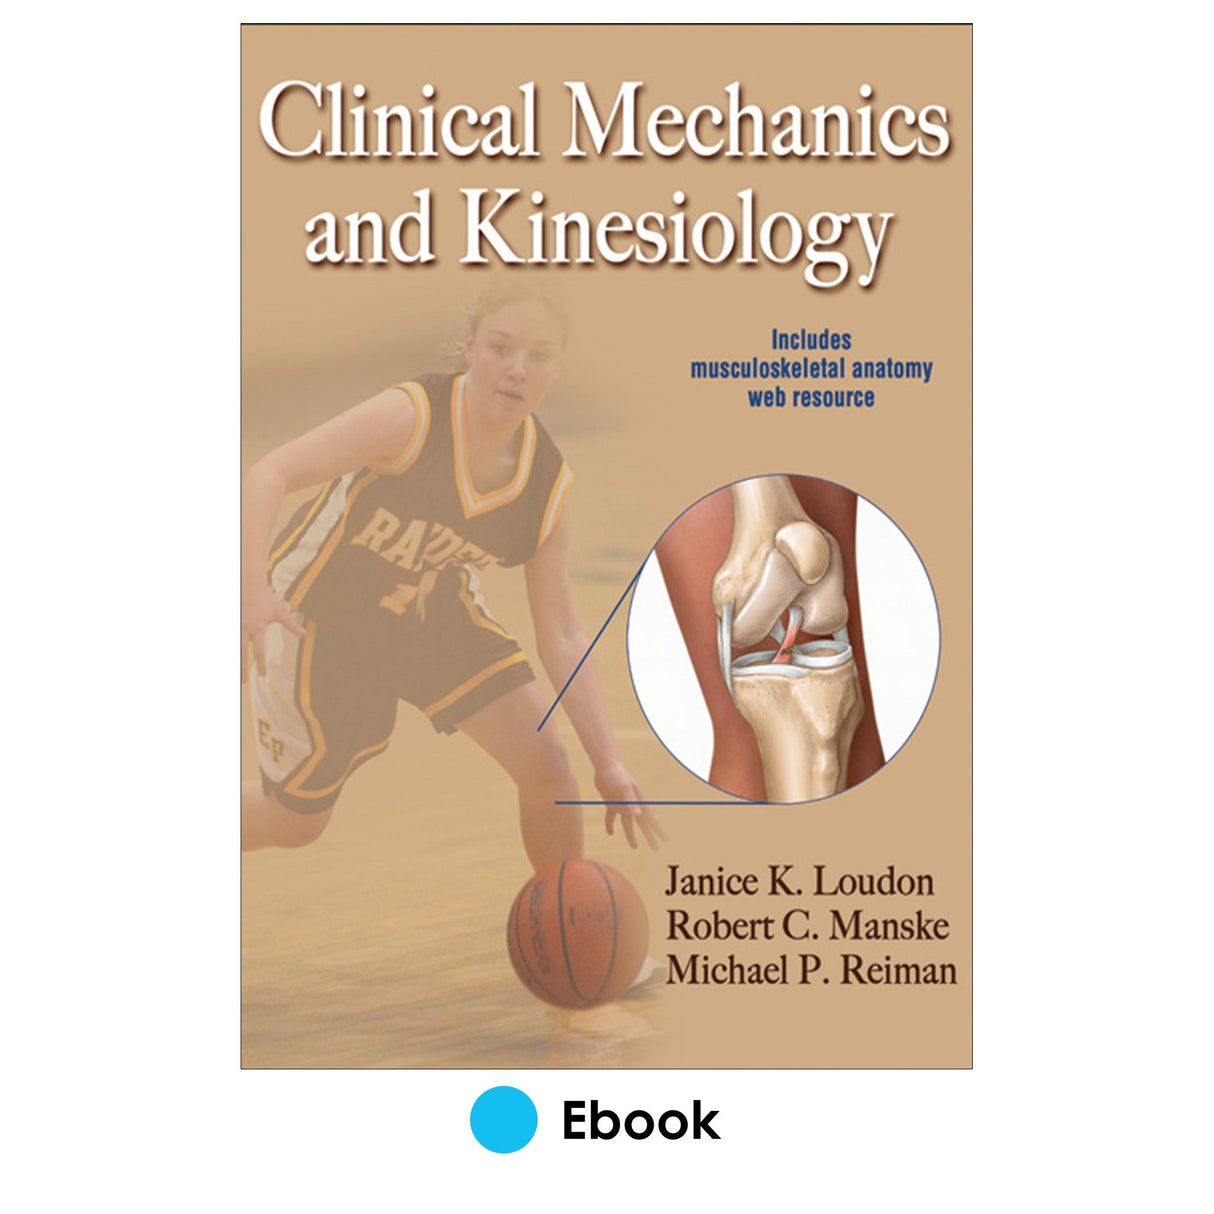 Clinical Mechanics and Kinesiology PDF With Web Resource